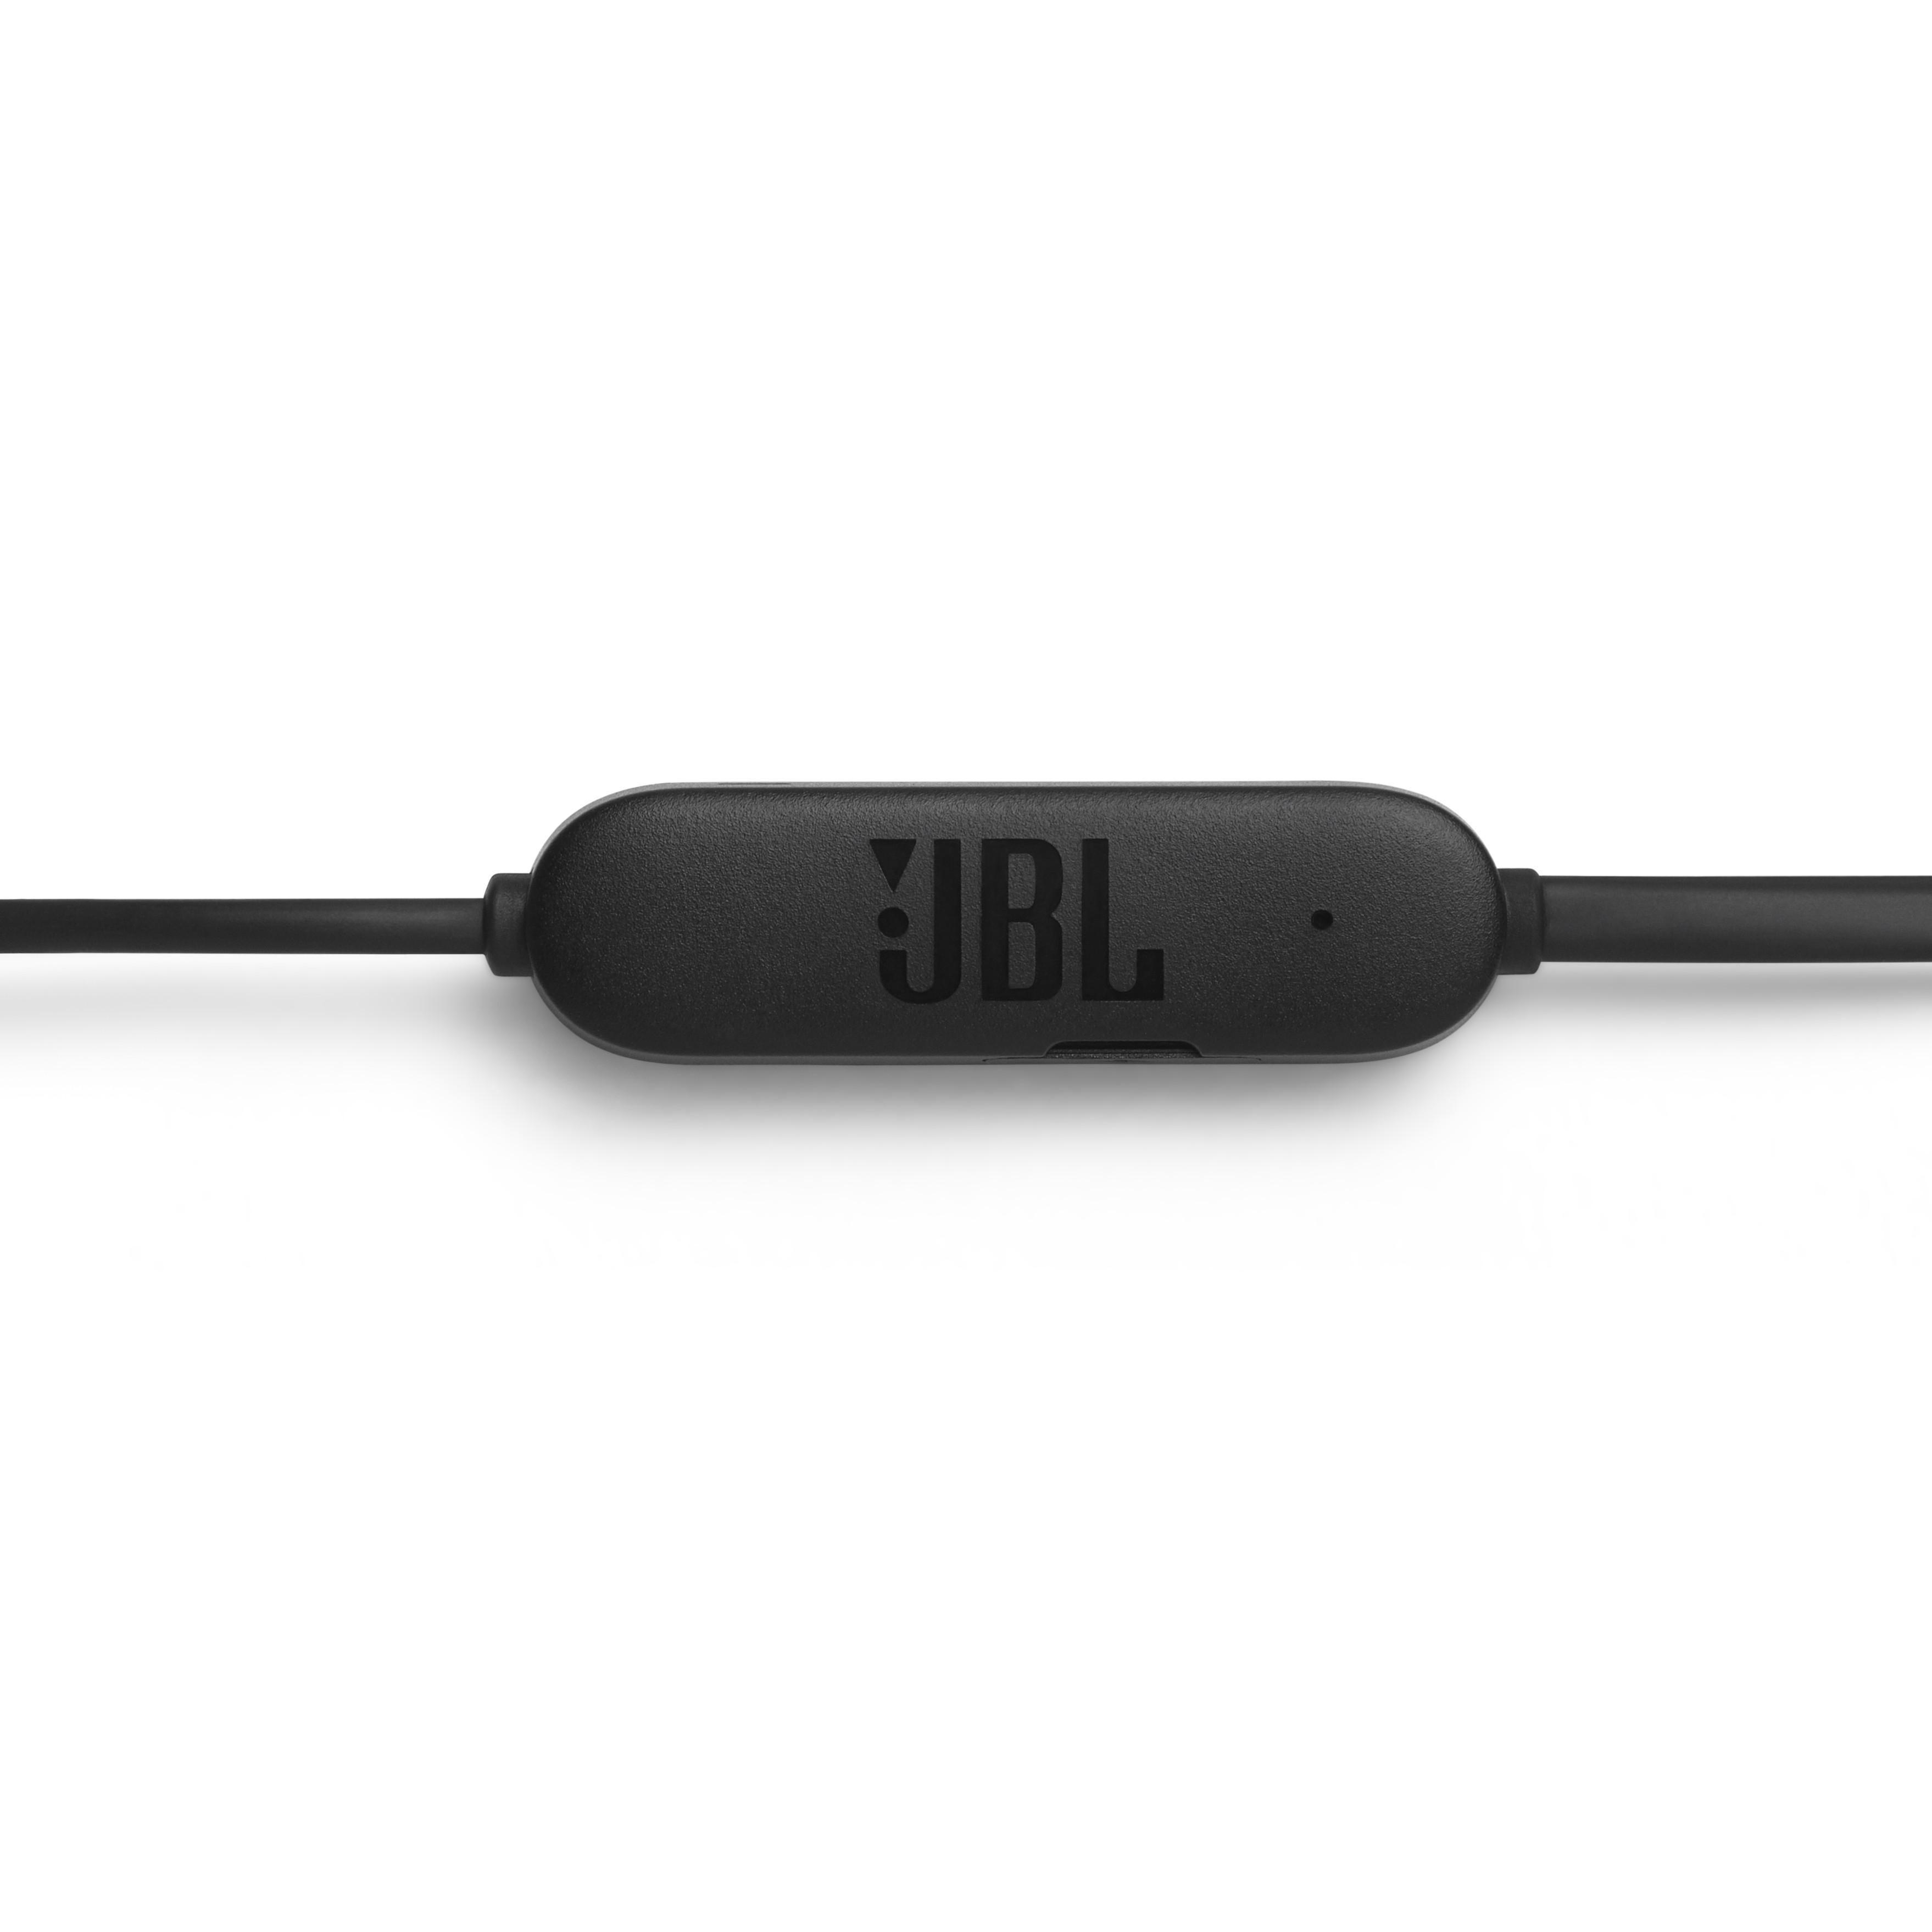 In-ear TUNE 215BT, Schwarz JBL Kopfhörer Bluetooth